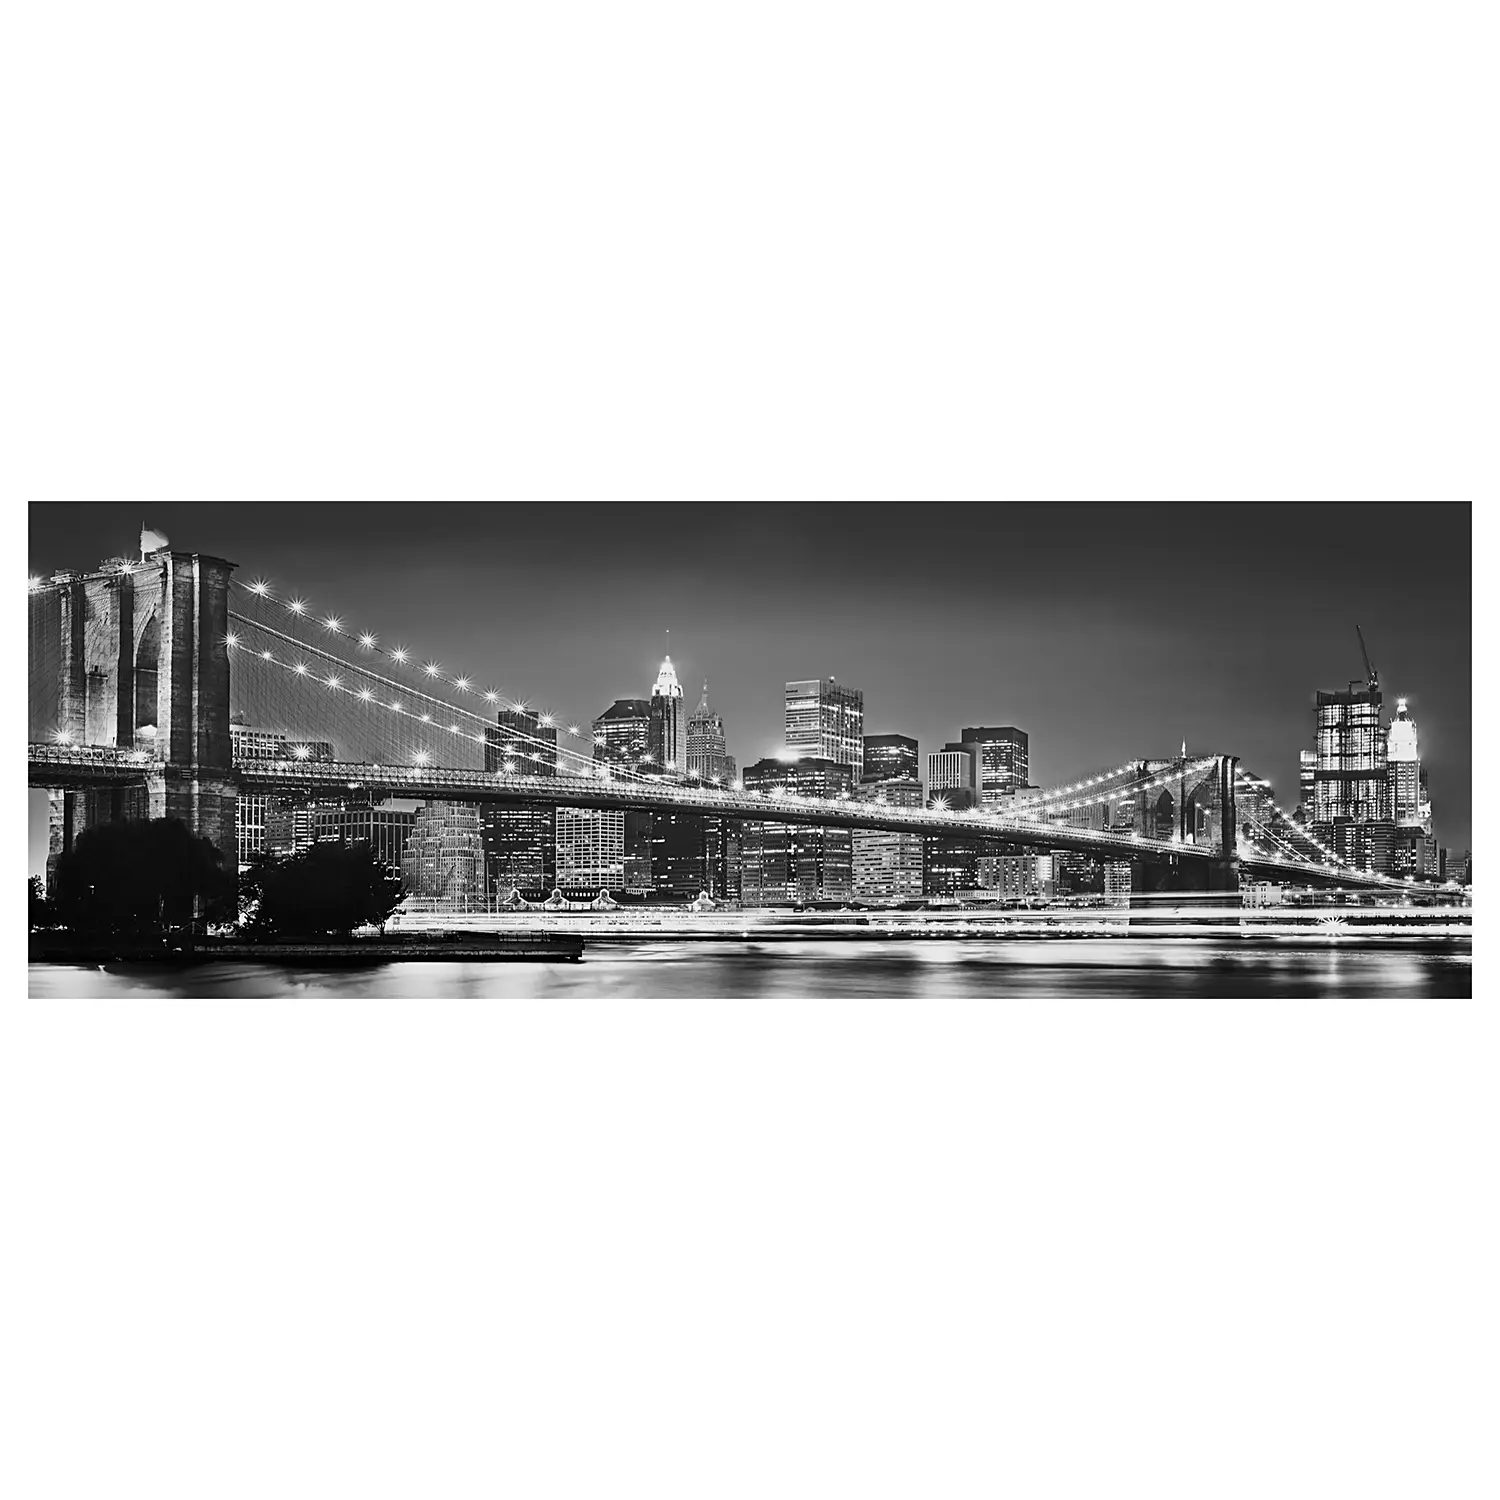 Fototapete Brooklyn Bridge